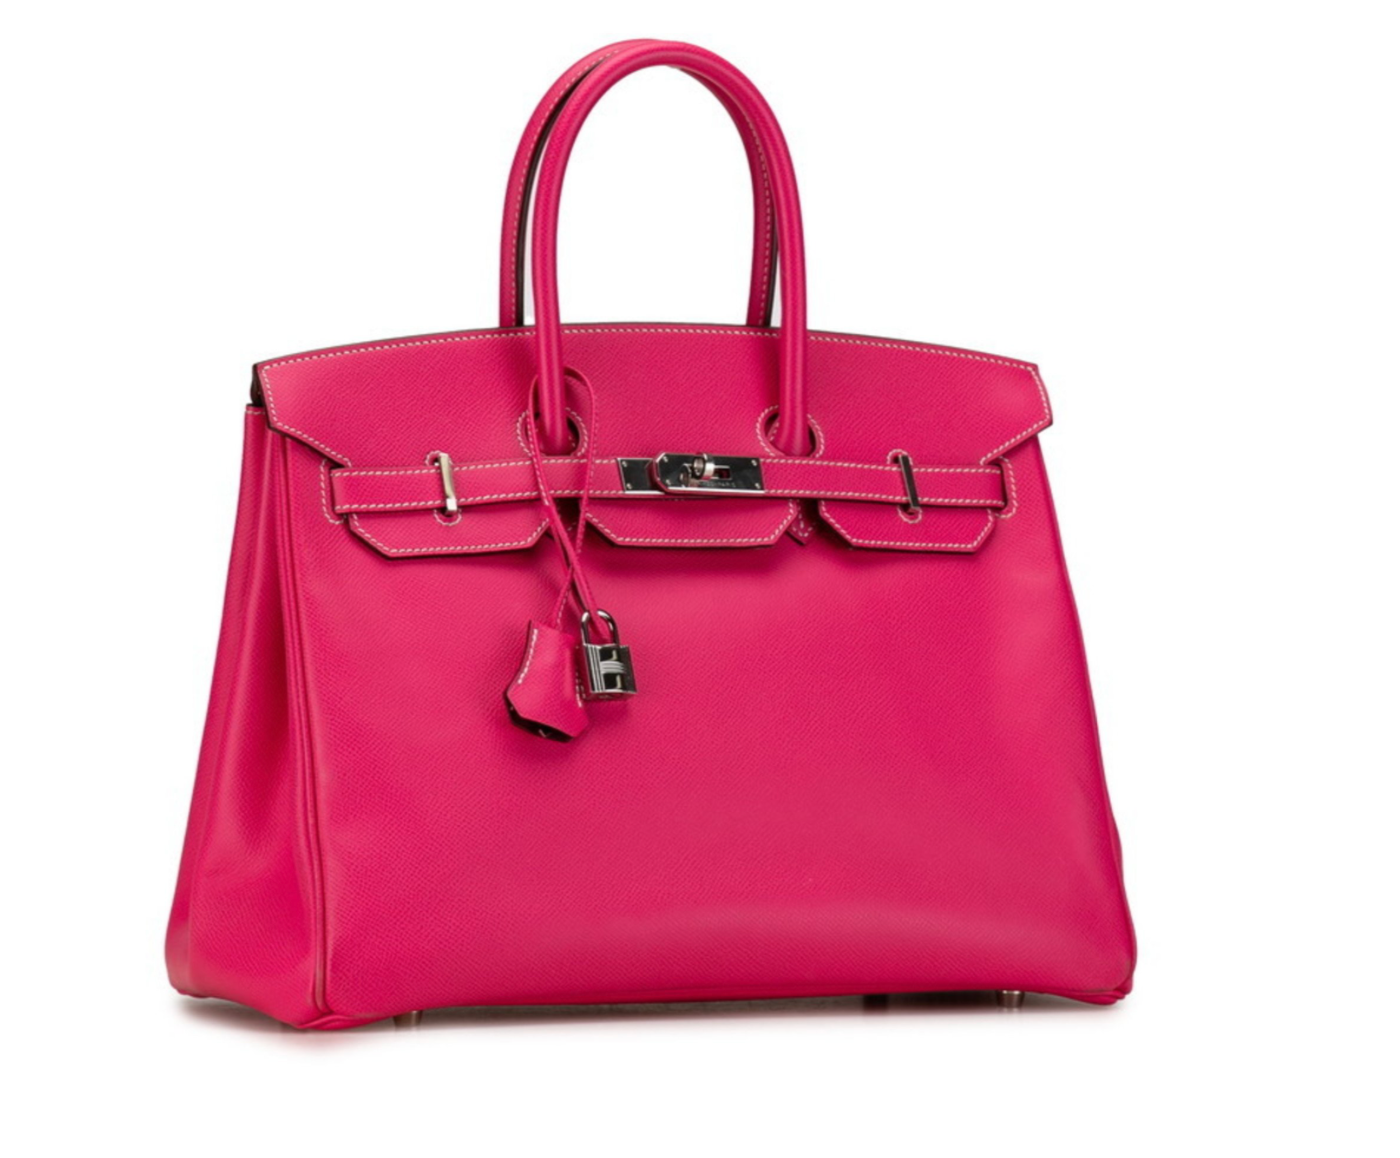 Pe-owned 2012 Hermes Birkin 35 Epsom leather handbag in a lovely pink hue featuring palladium hardware